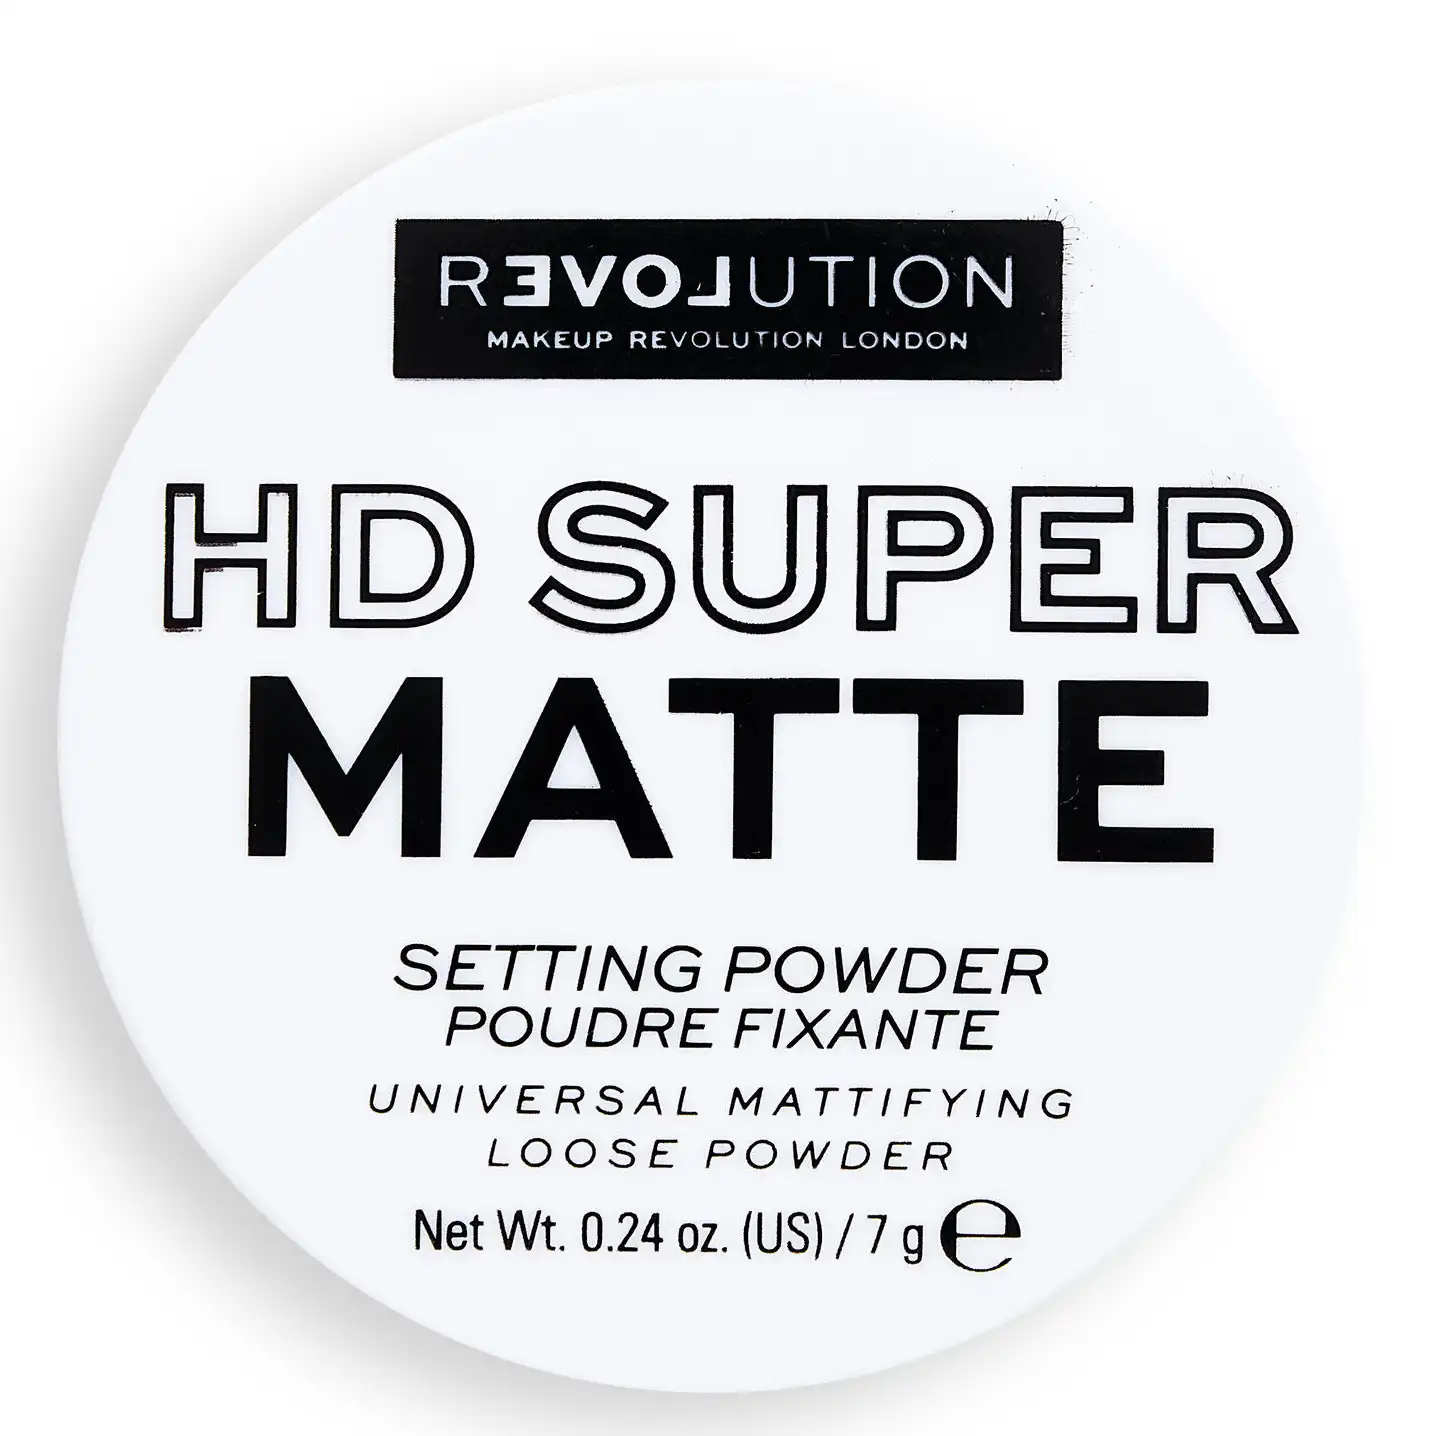 REVOLUTION RELOVE HD SUPER MATTE LOOSE SETTING POWDER